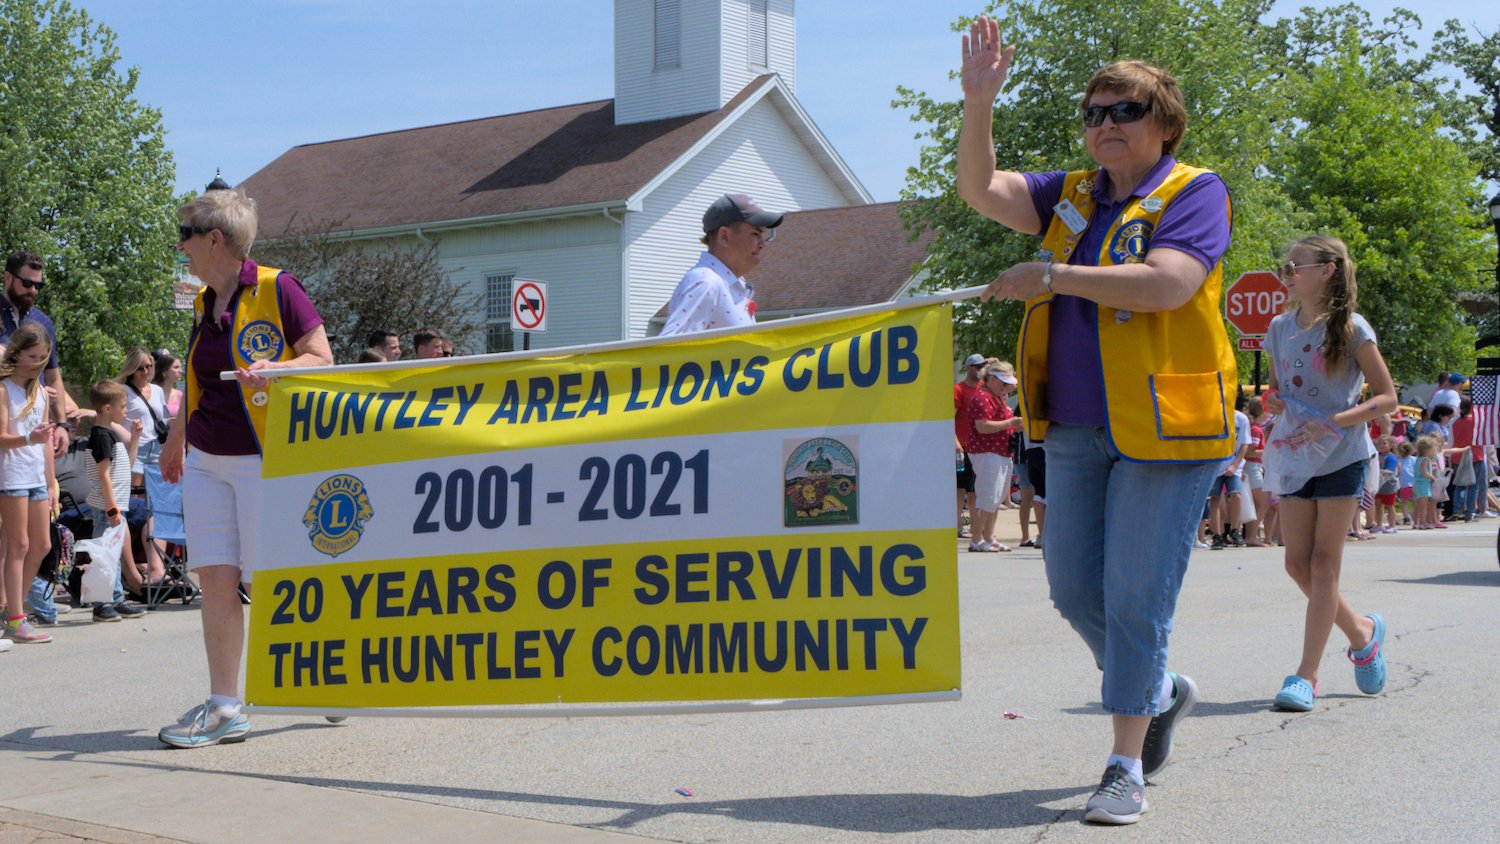 Huntley area Lions Club.